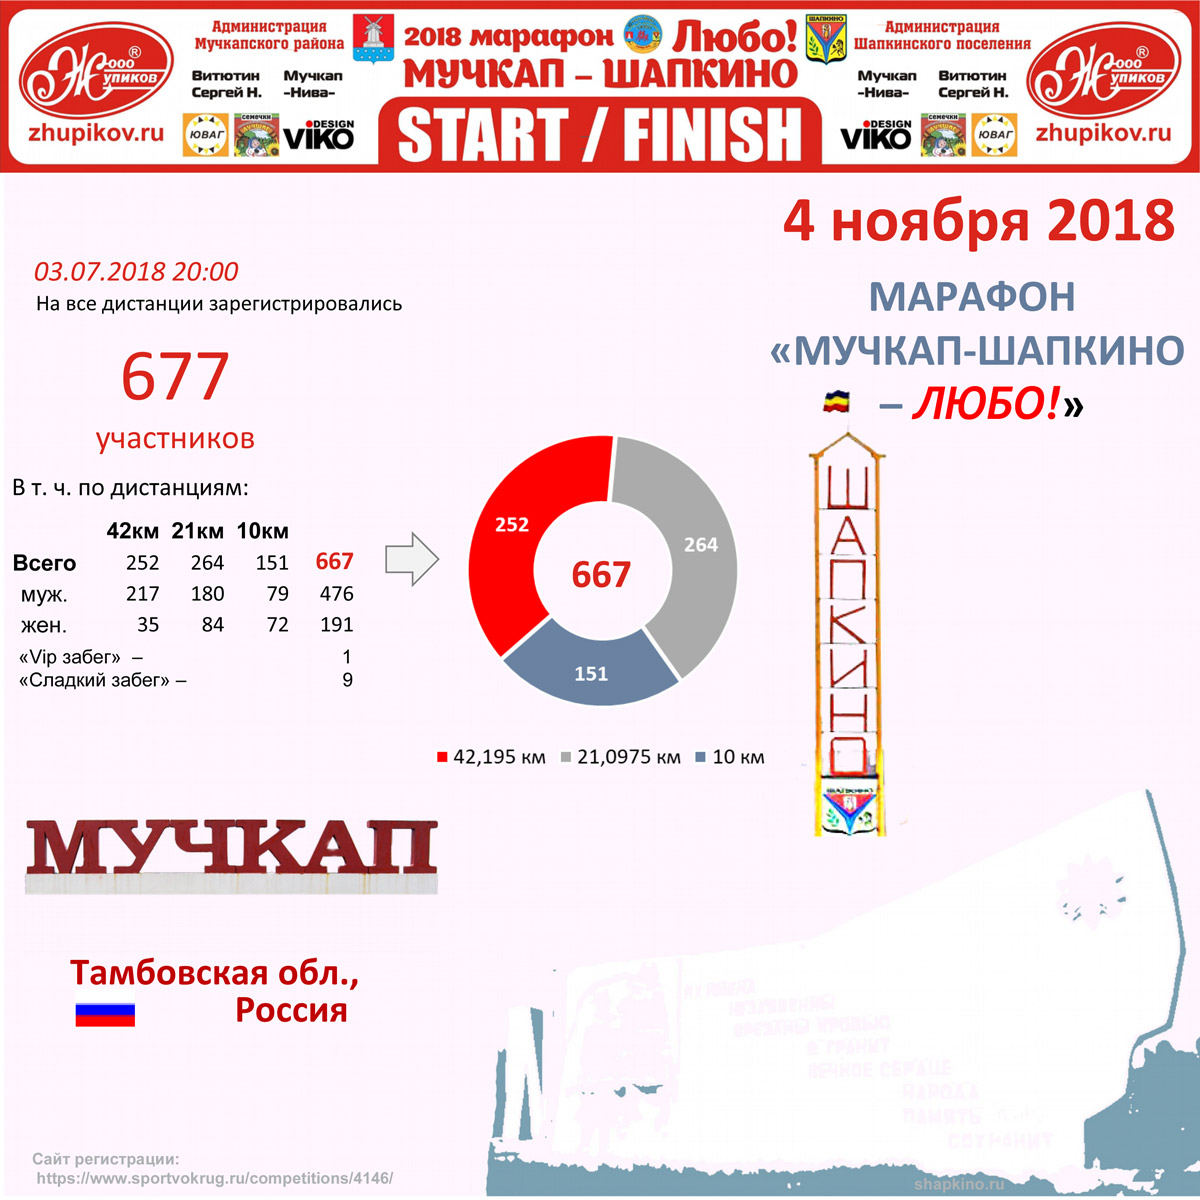 2018 marathon muchkap shapkino lyubo banner 8